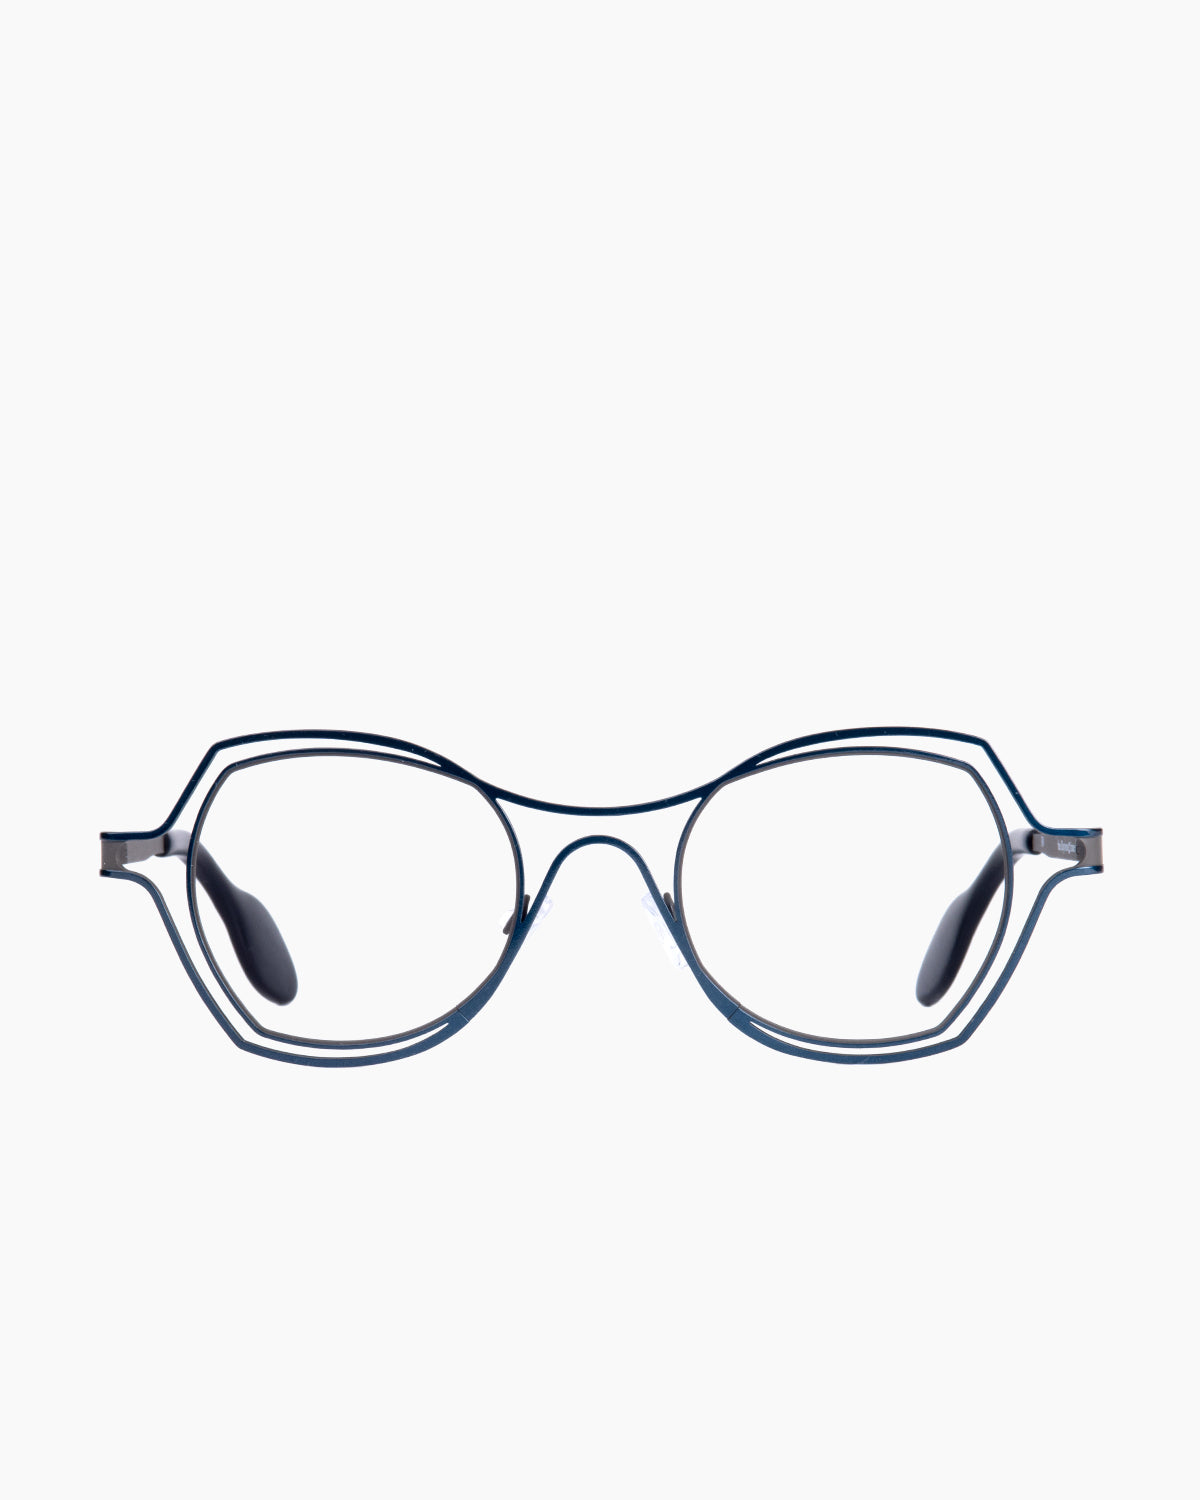 Theo - DAYTONA - 380 | glasses bar